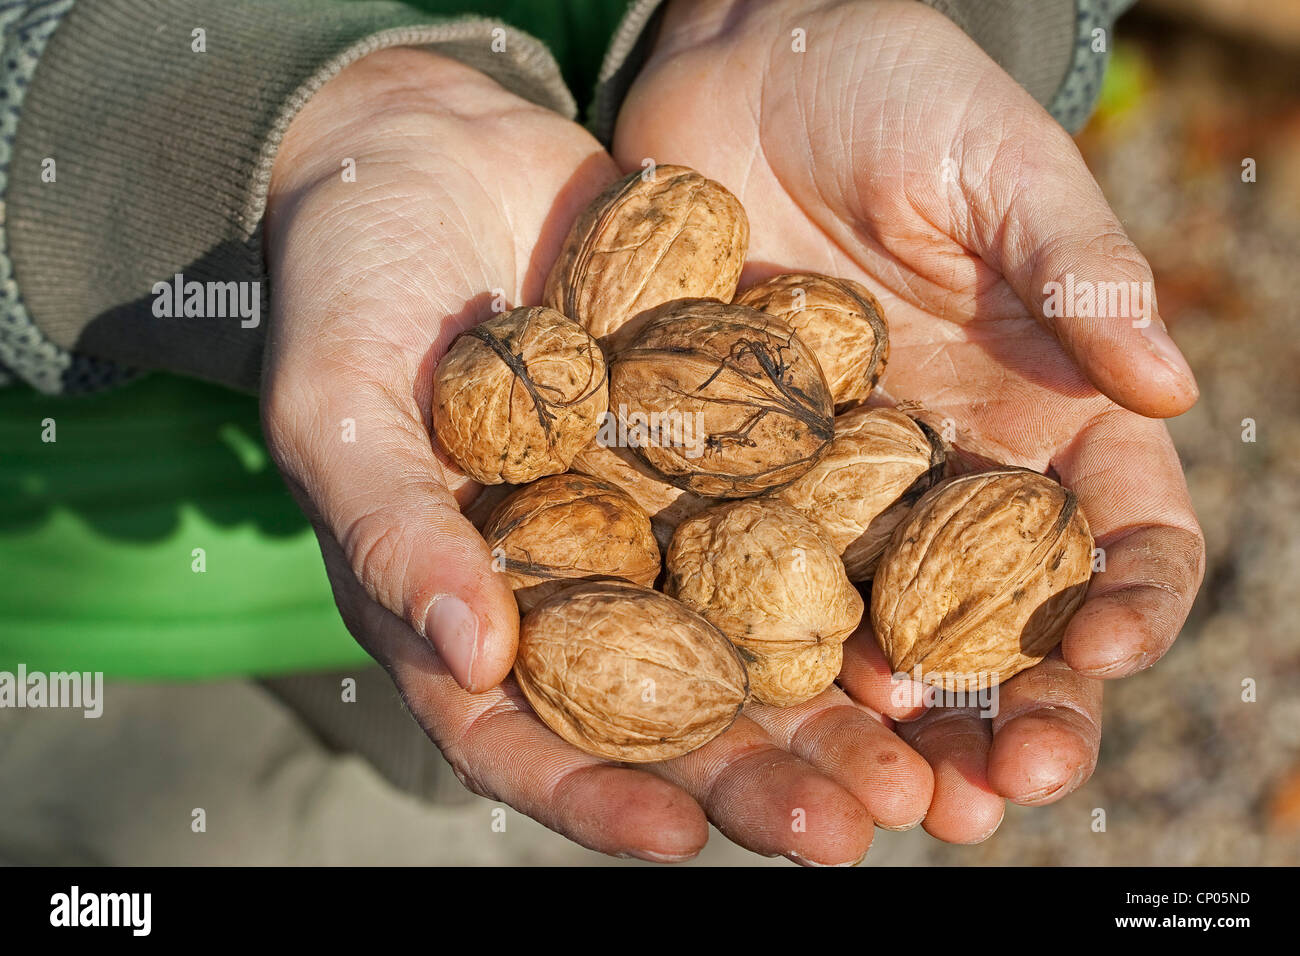 walnut (Juglans regia), child has collected walnus, Germany Stock Photo